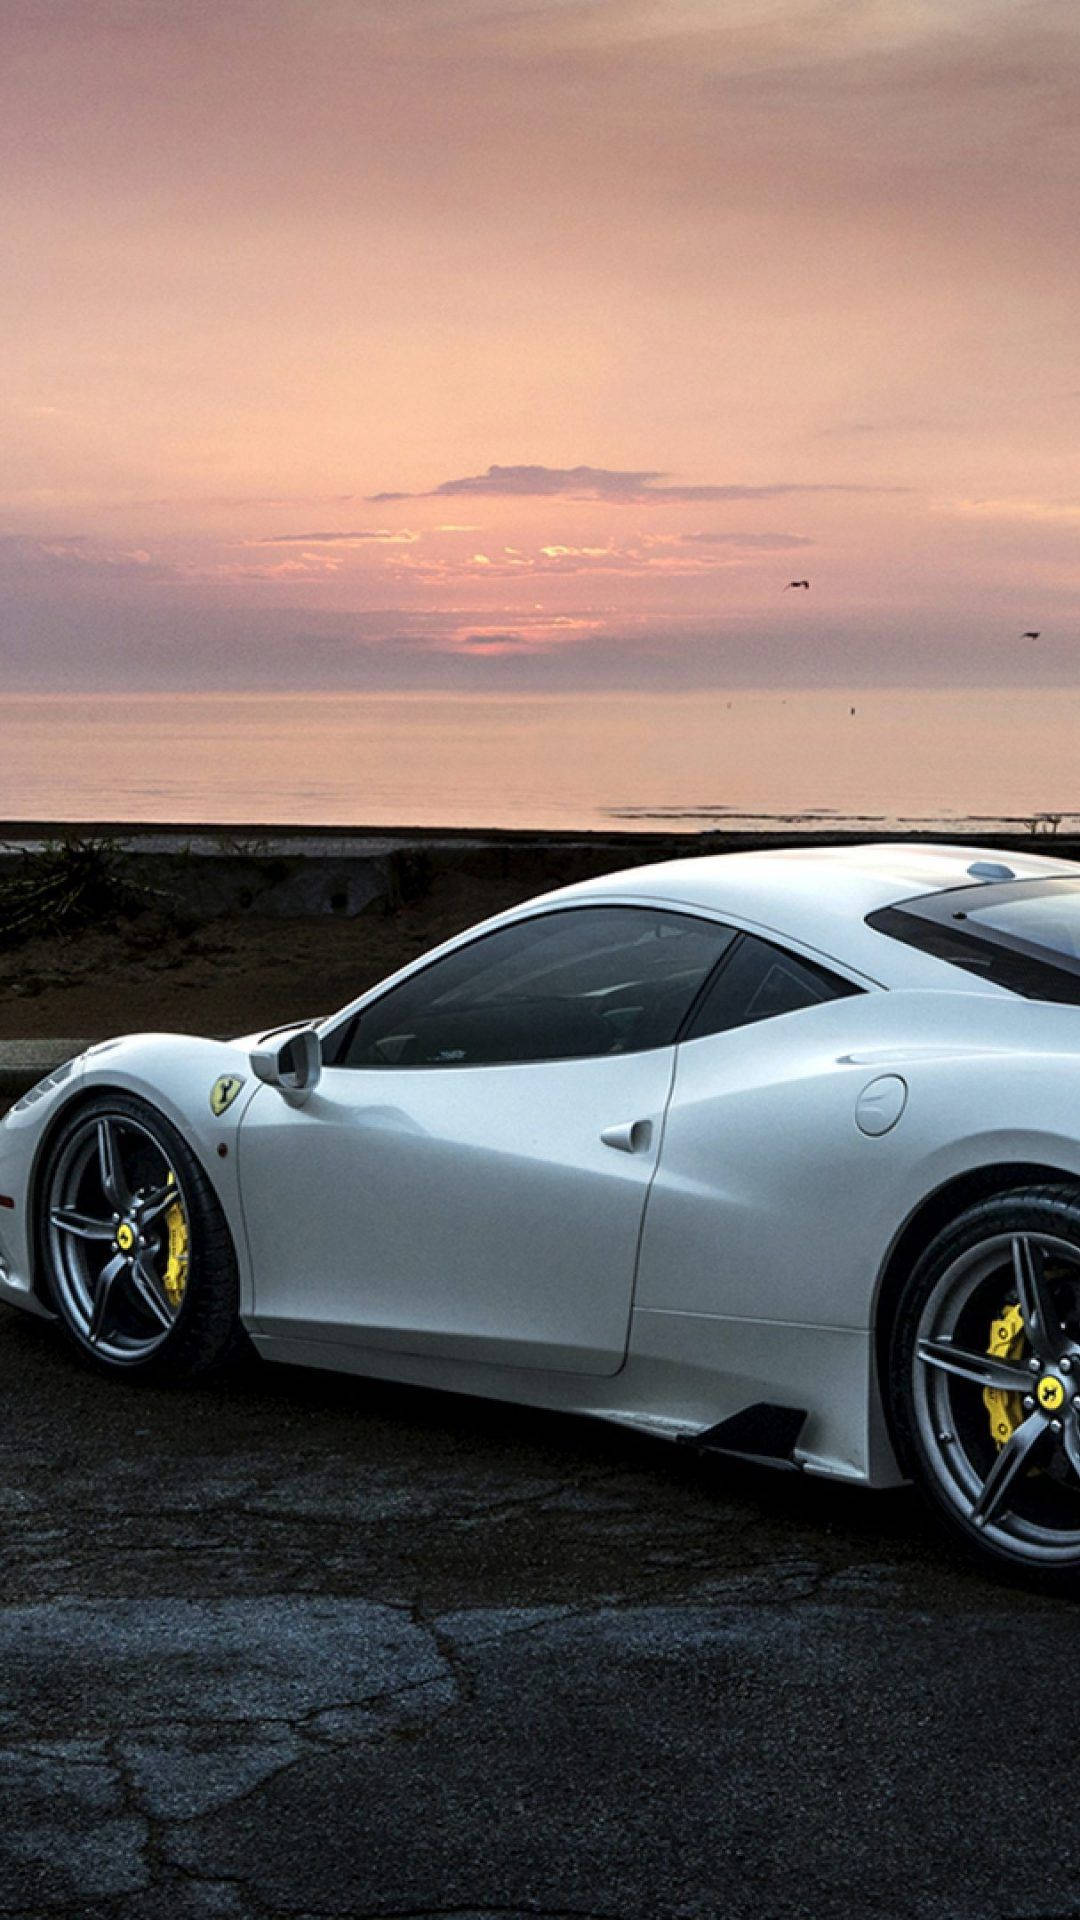 Beach Sunset Ferrari Iphone Background